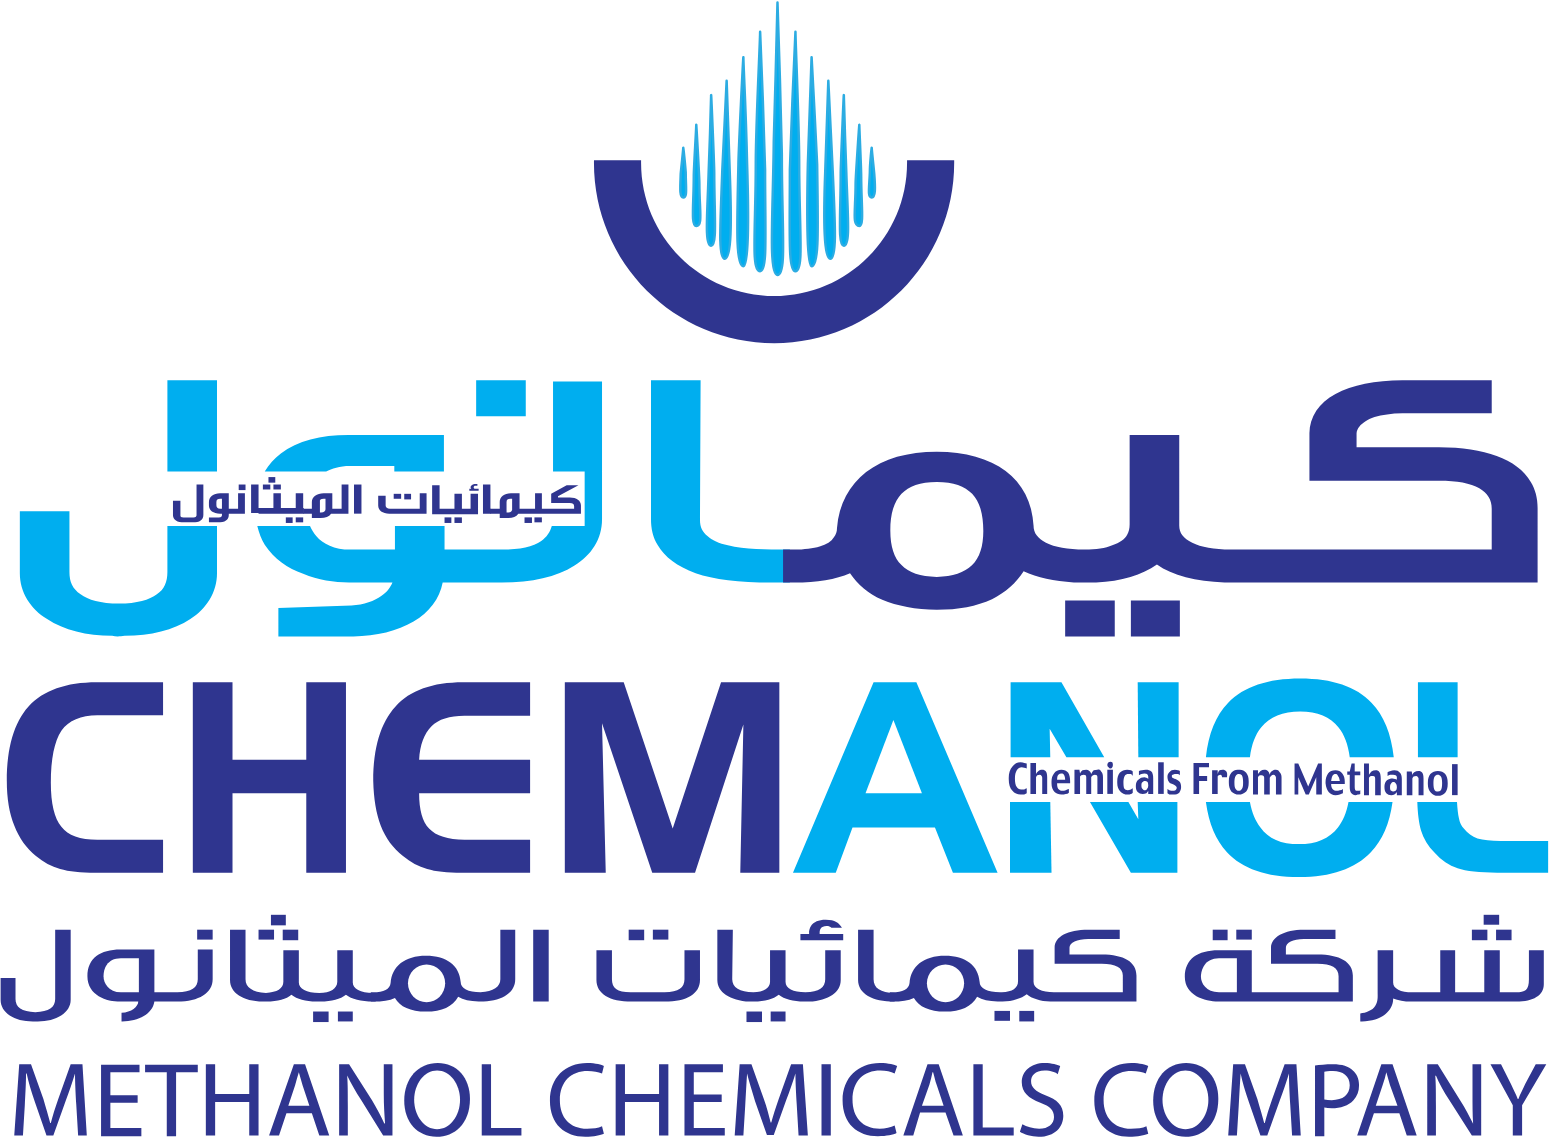 Methanol Chemicals Company logo large (transparent PNG)